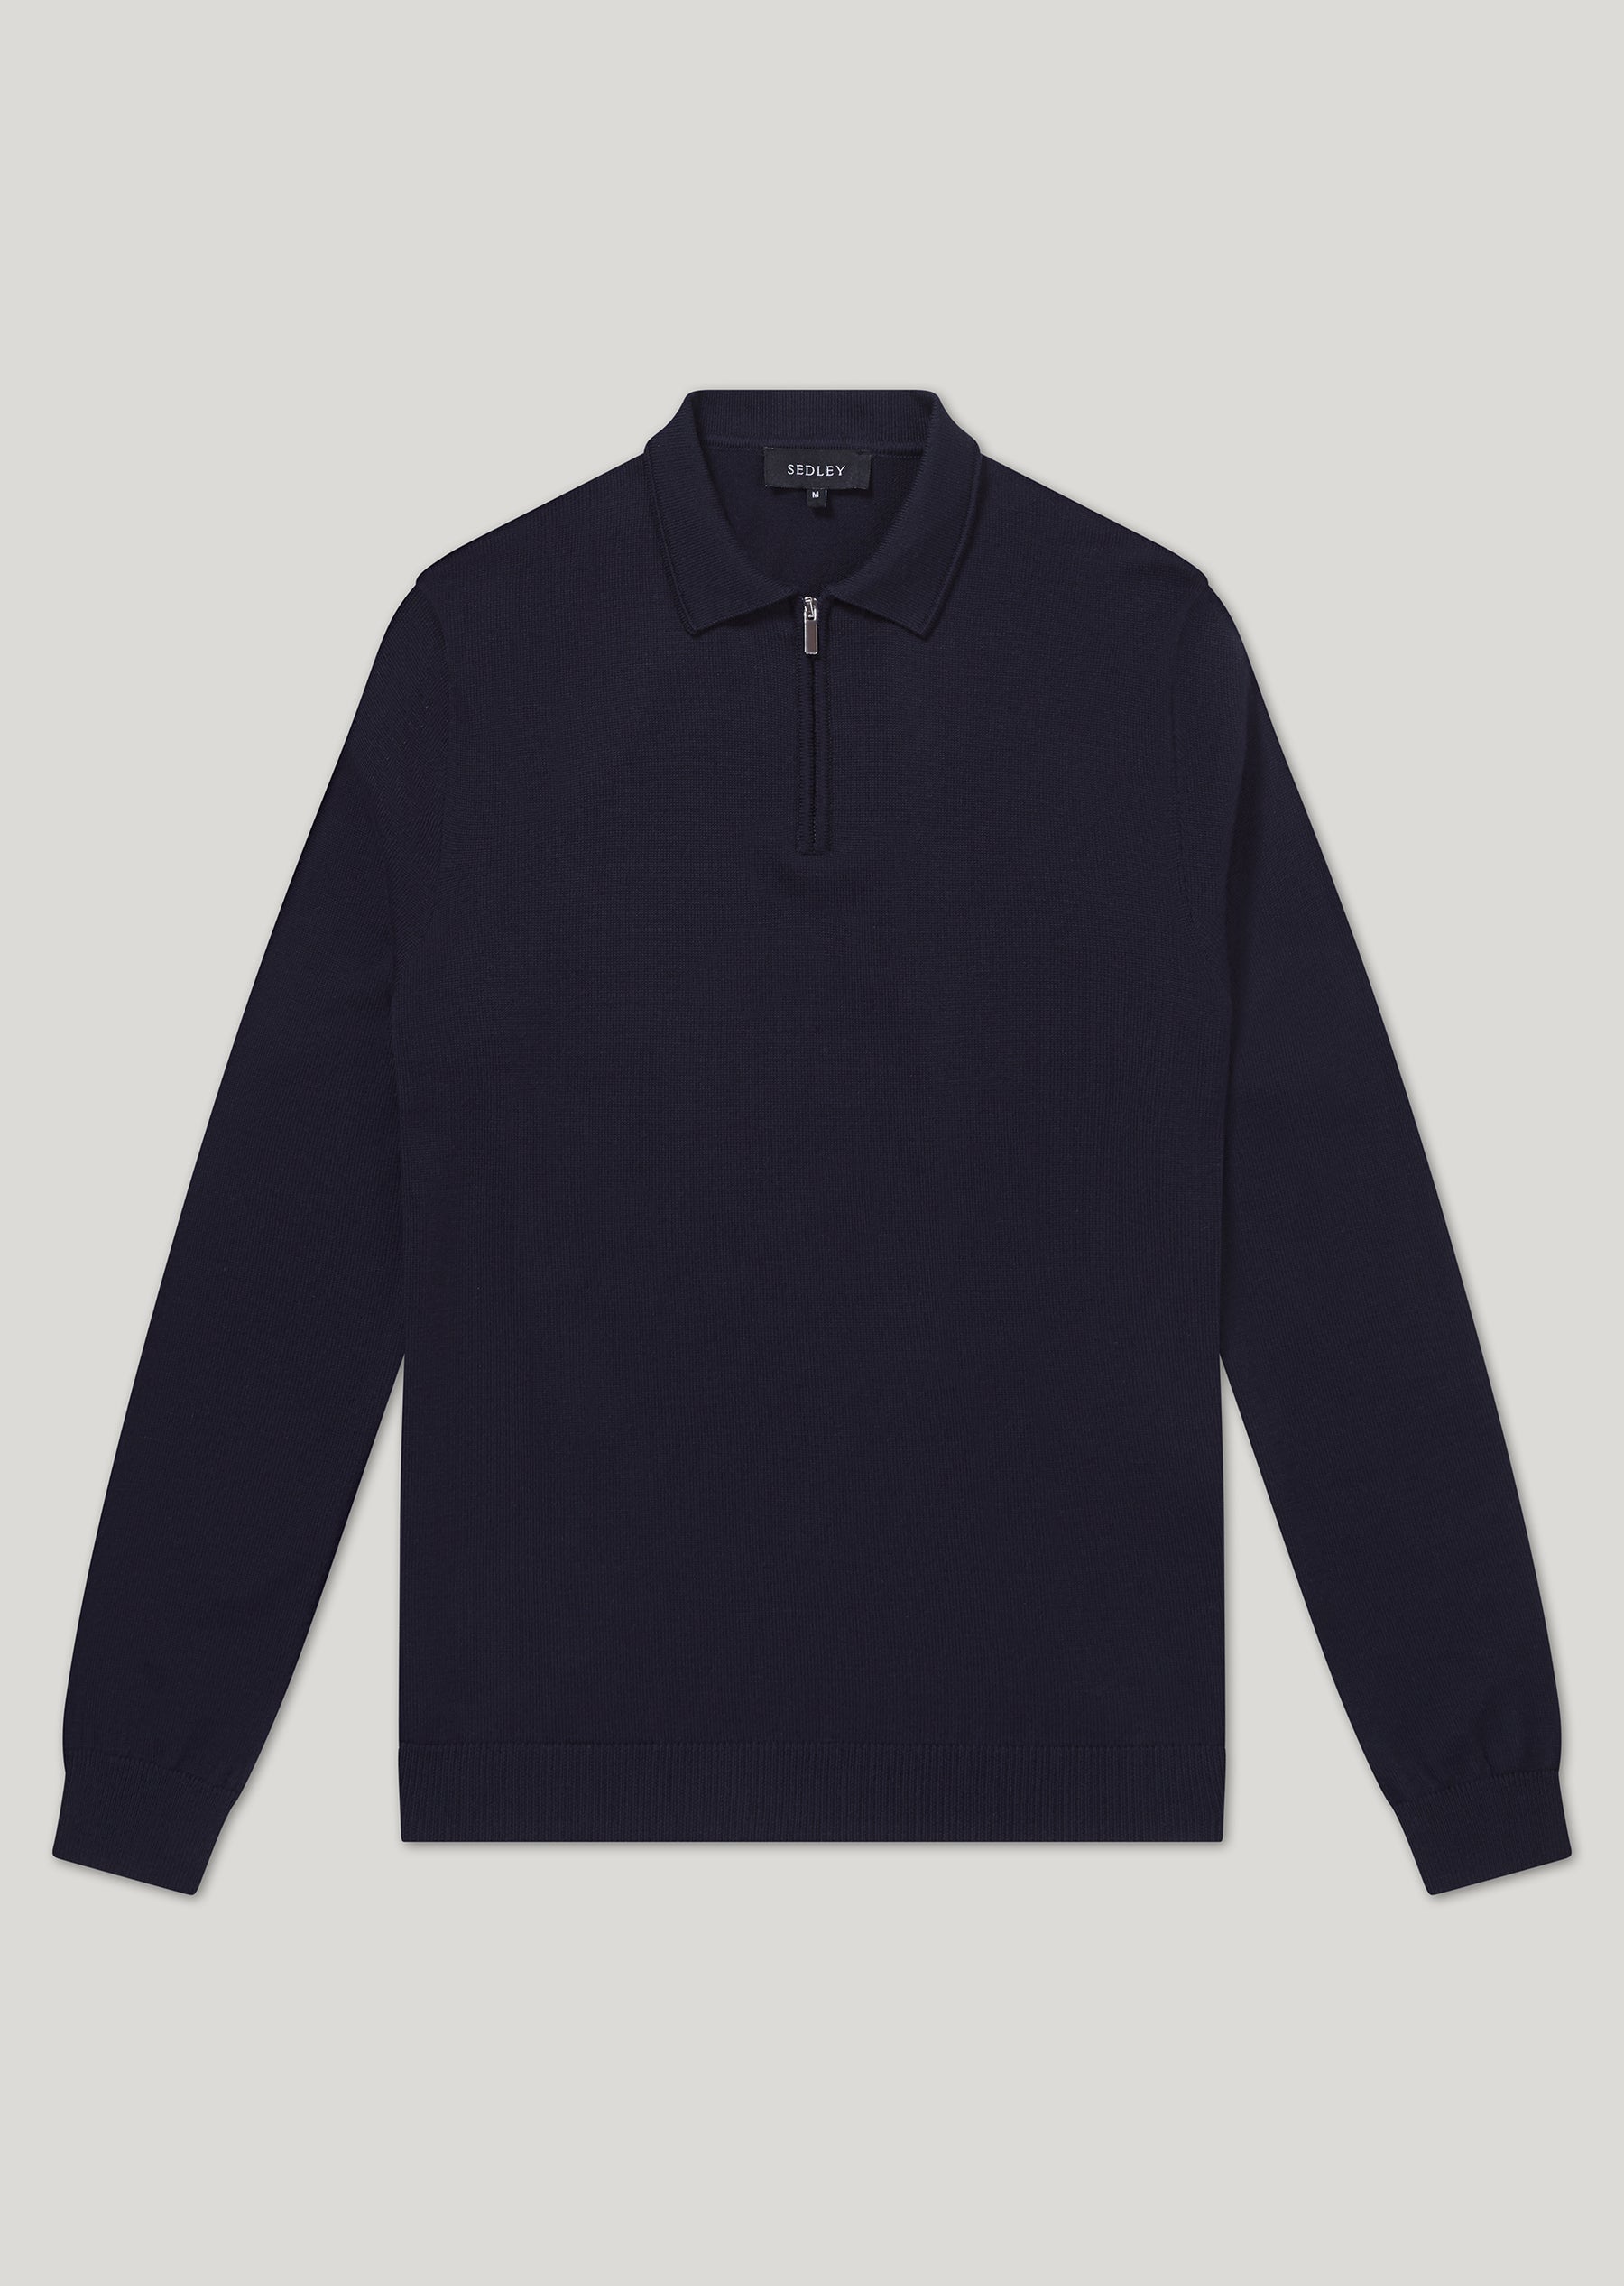 Hone Navy Zip Up 100% Wool Knitted Sweatshirt